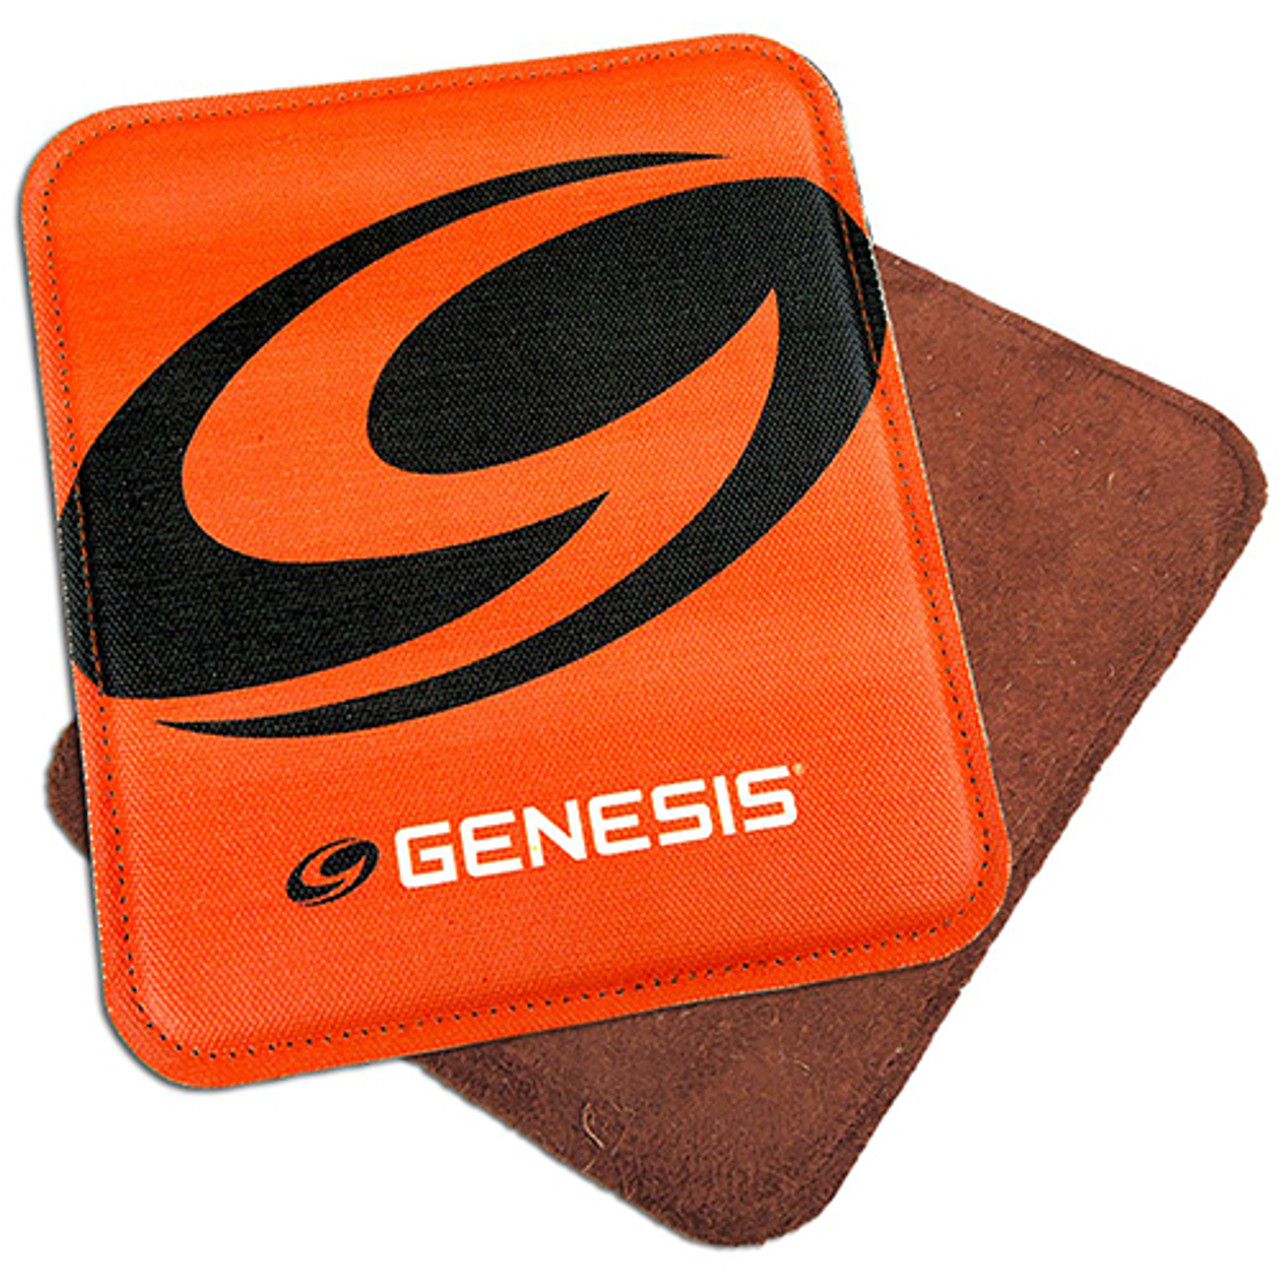 Genesis Pure Pad Buffalo Leather Ball Wipe Graphix